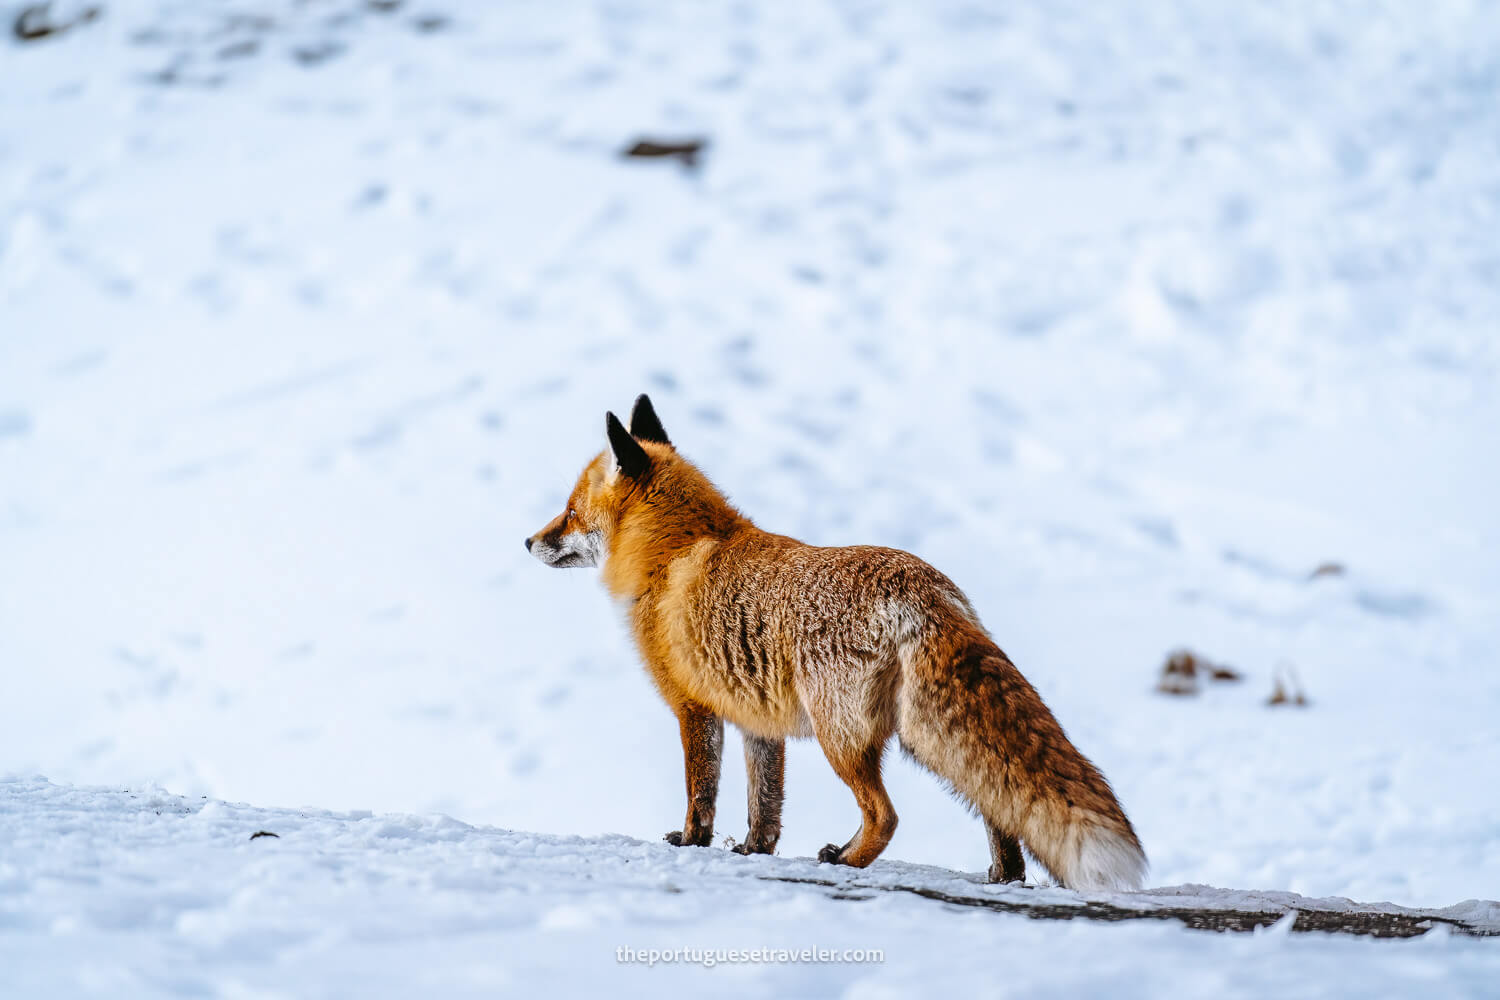 The fox posing around the hut